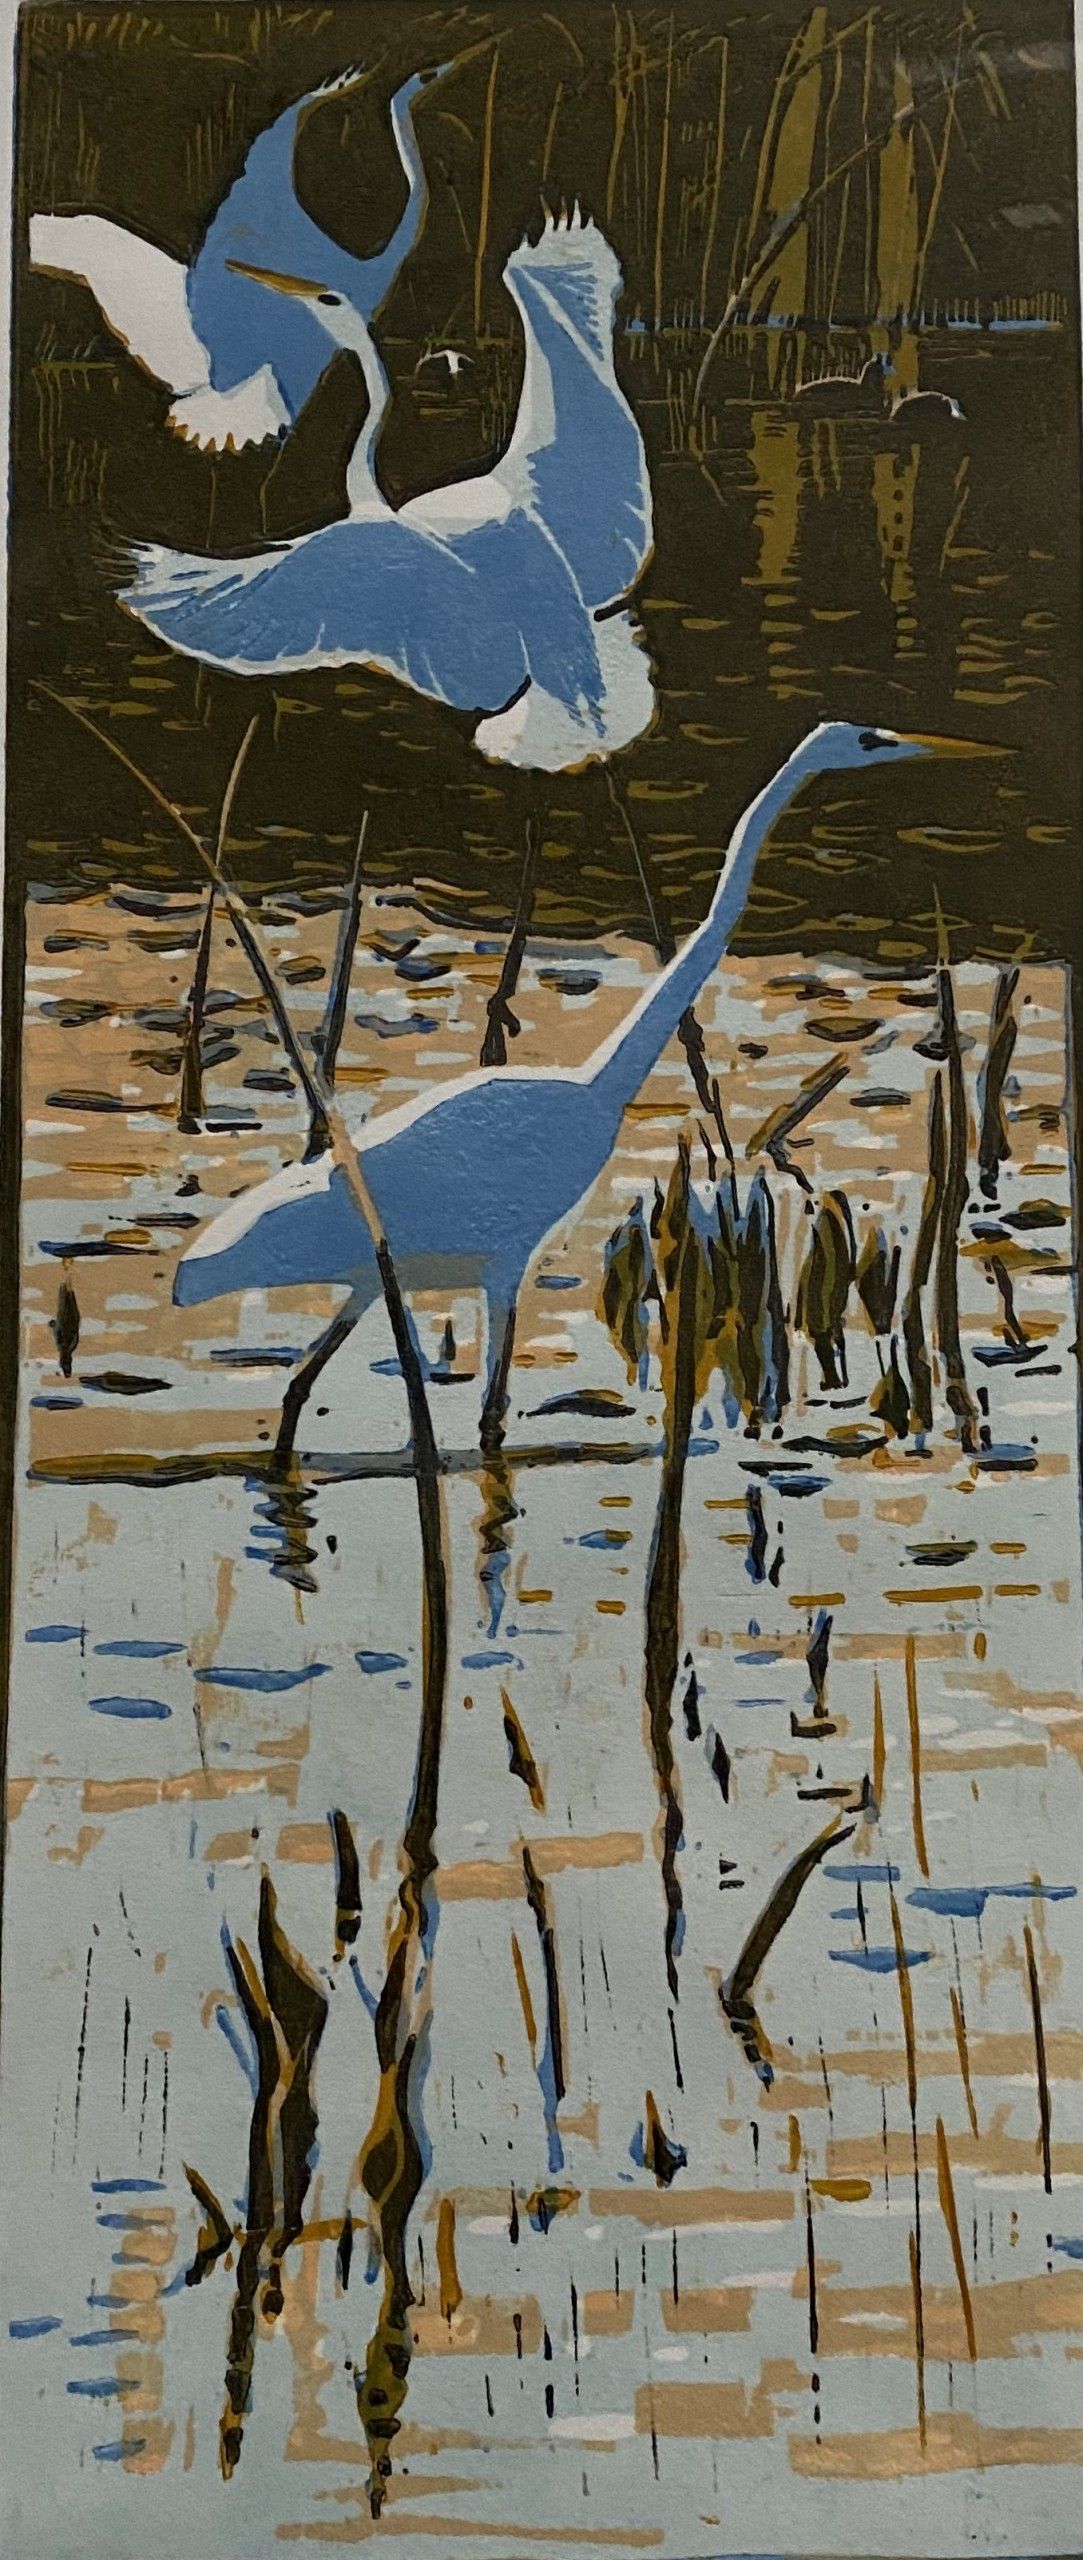 Great White Egrets by Robert Greenhalf